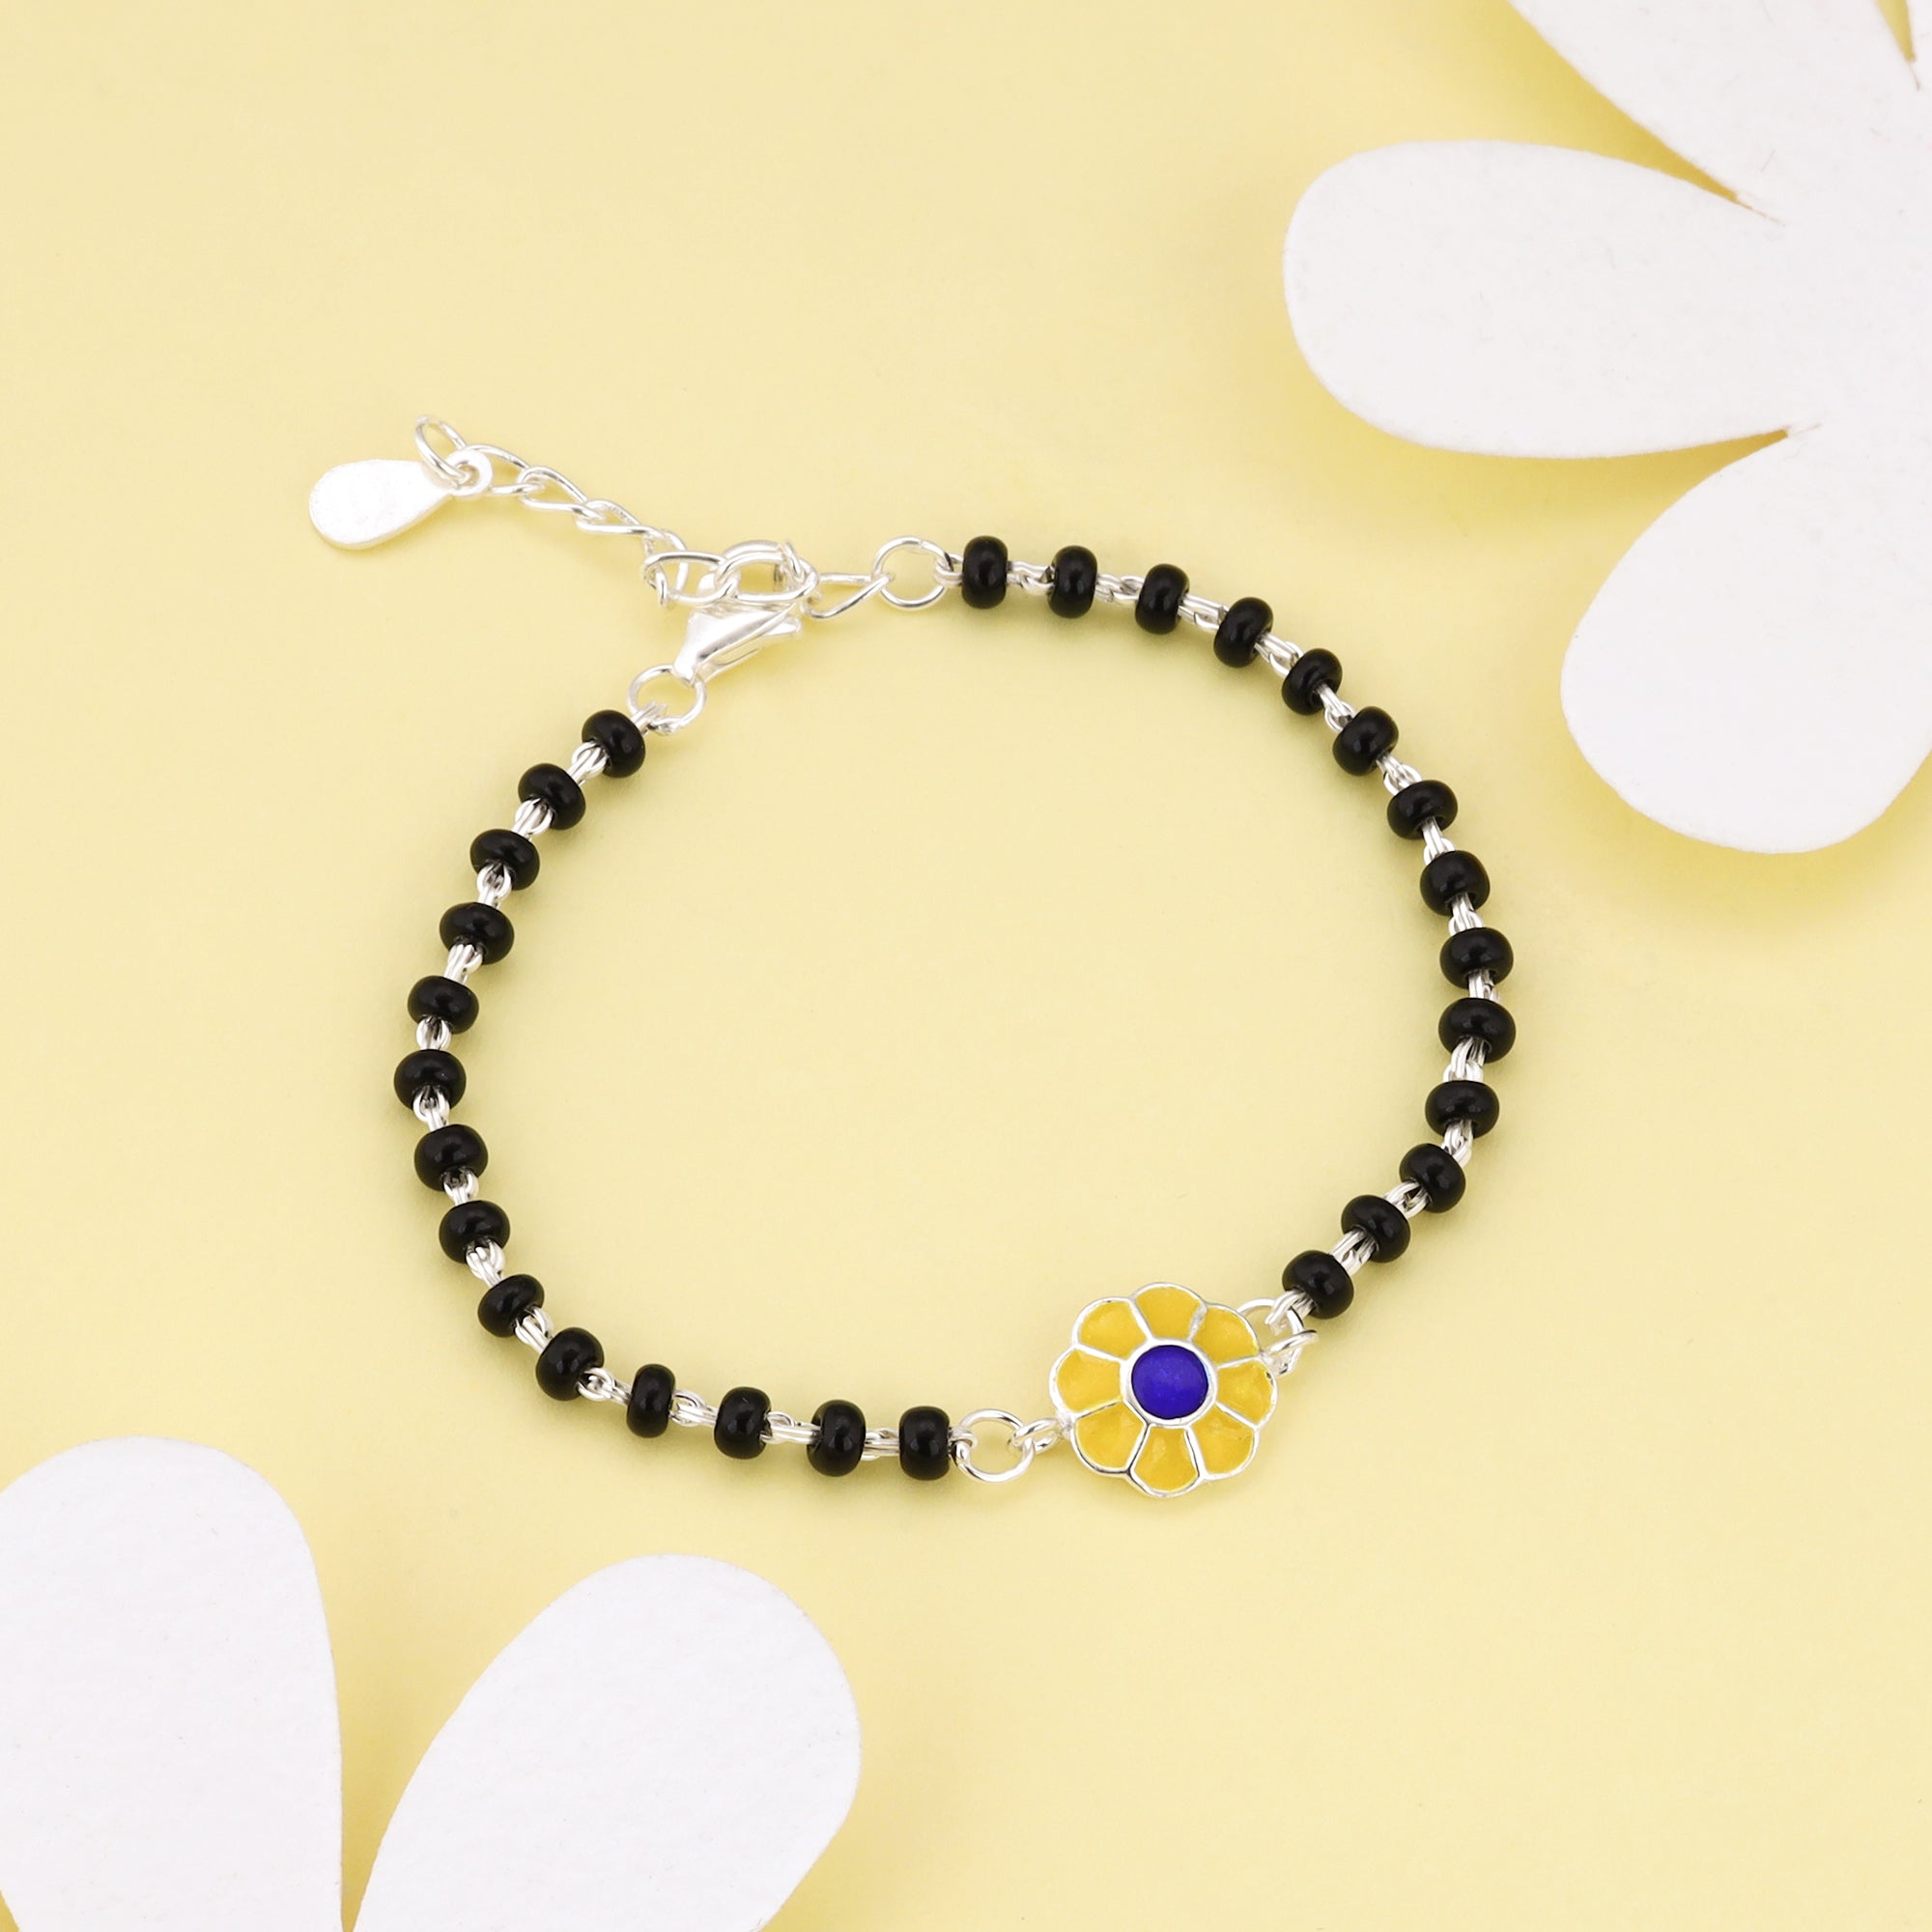 Baby Bracelet with Black beads. - BjBb3869 - Baby Bracelet with Black  beads. These bracelets are also known as maniya.